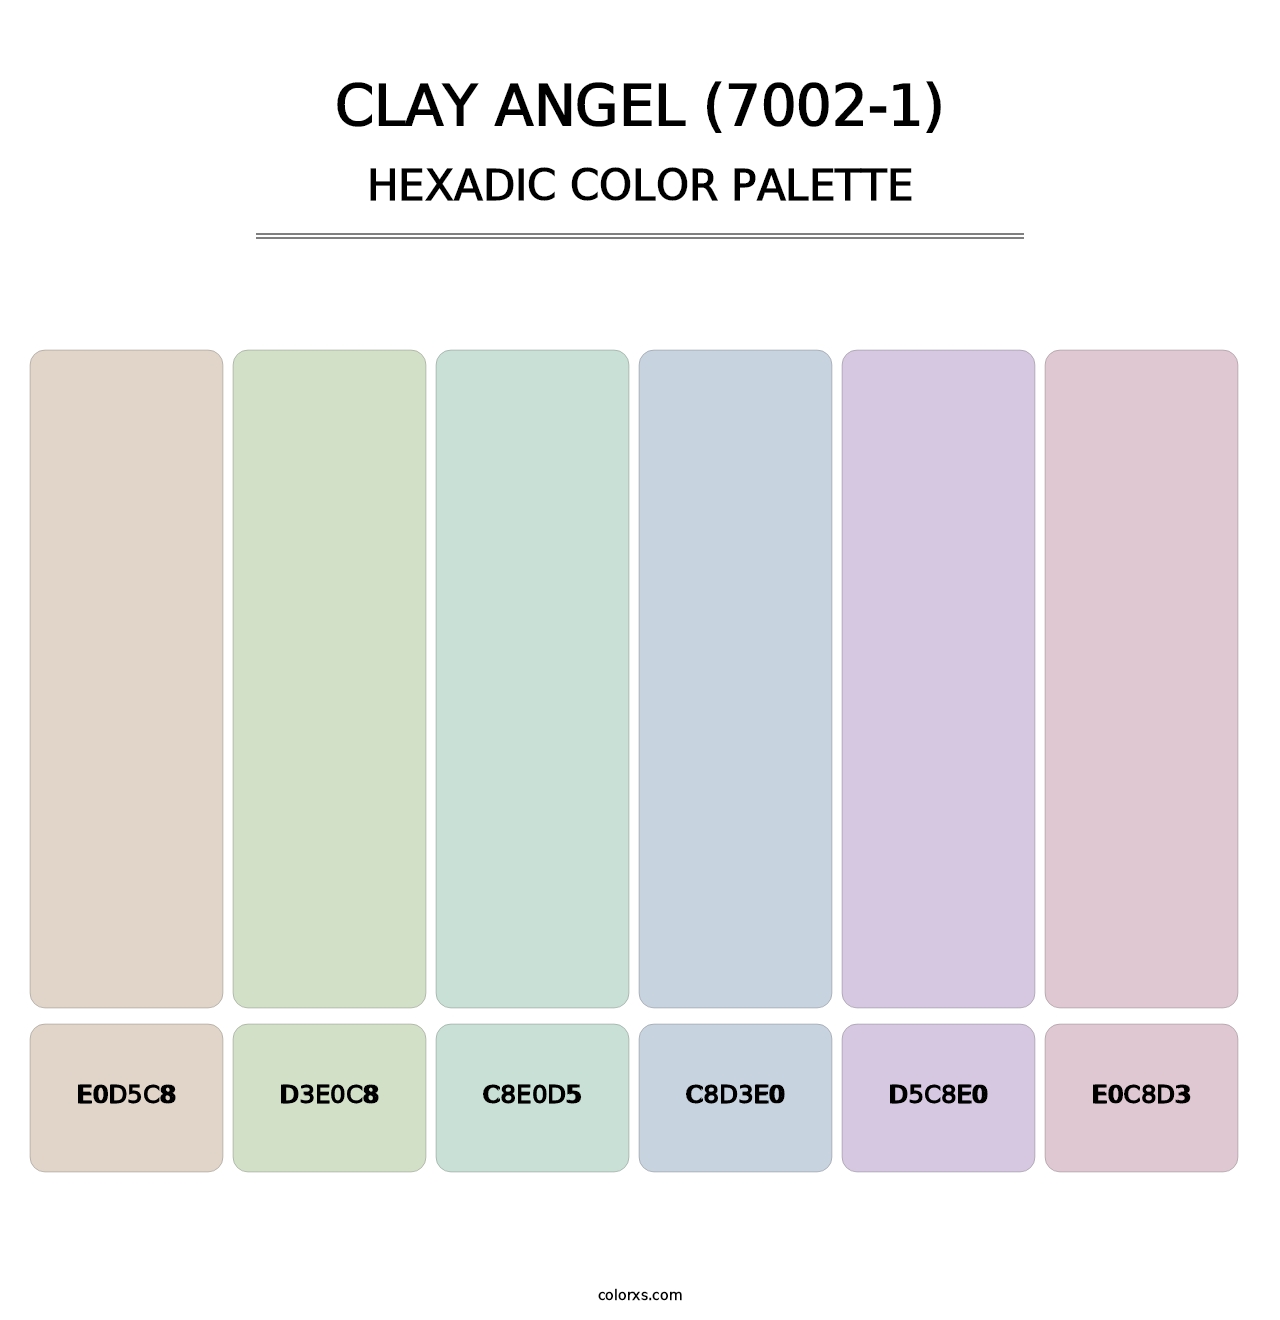 Clay Angel (7002-1) - Hexadic Color Palette